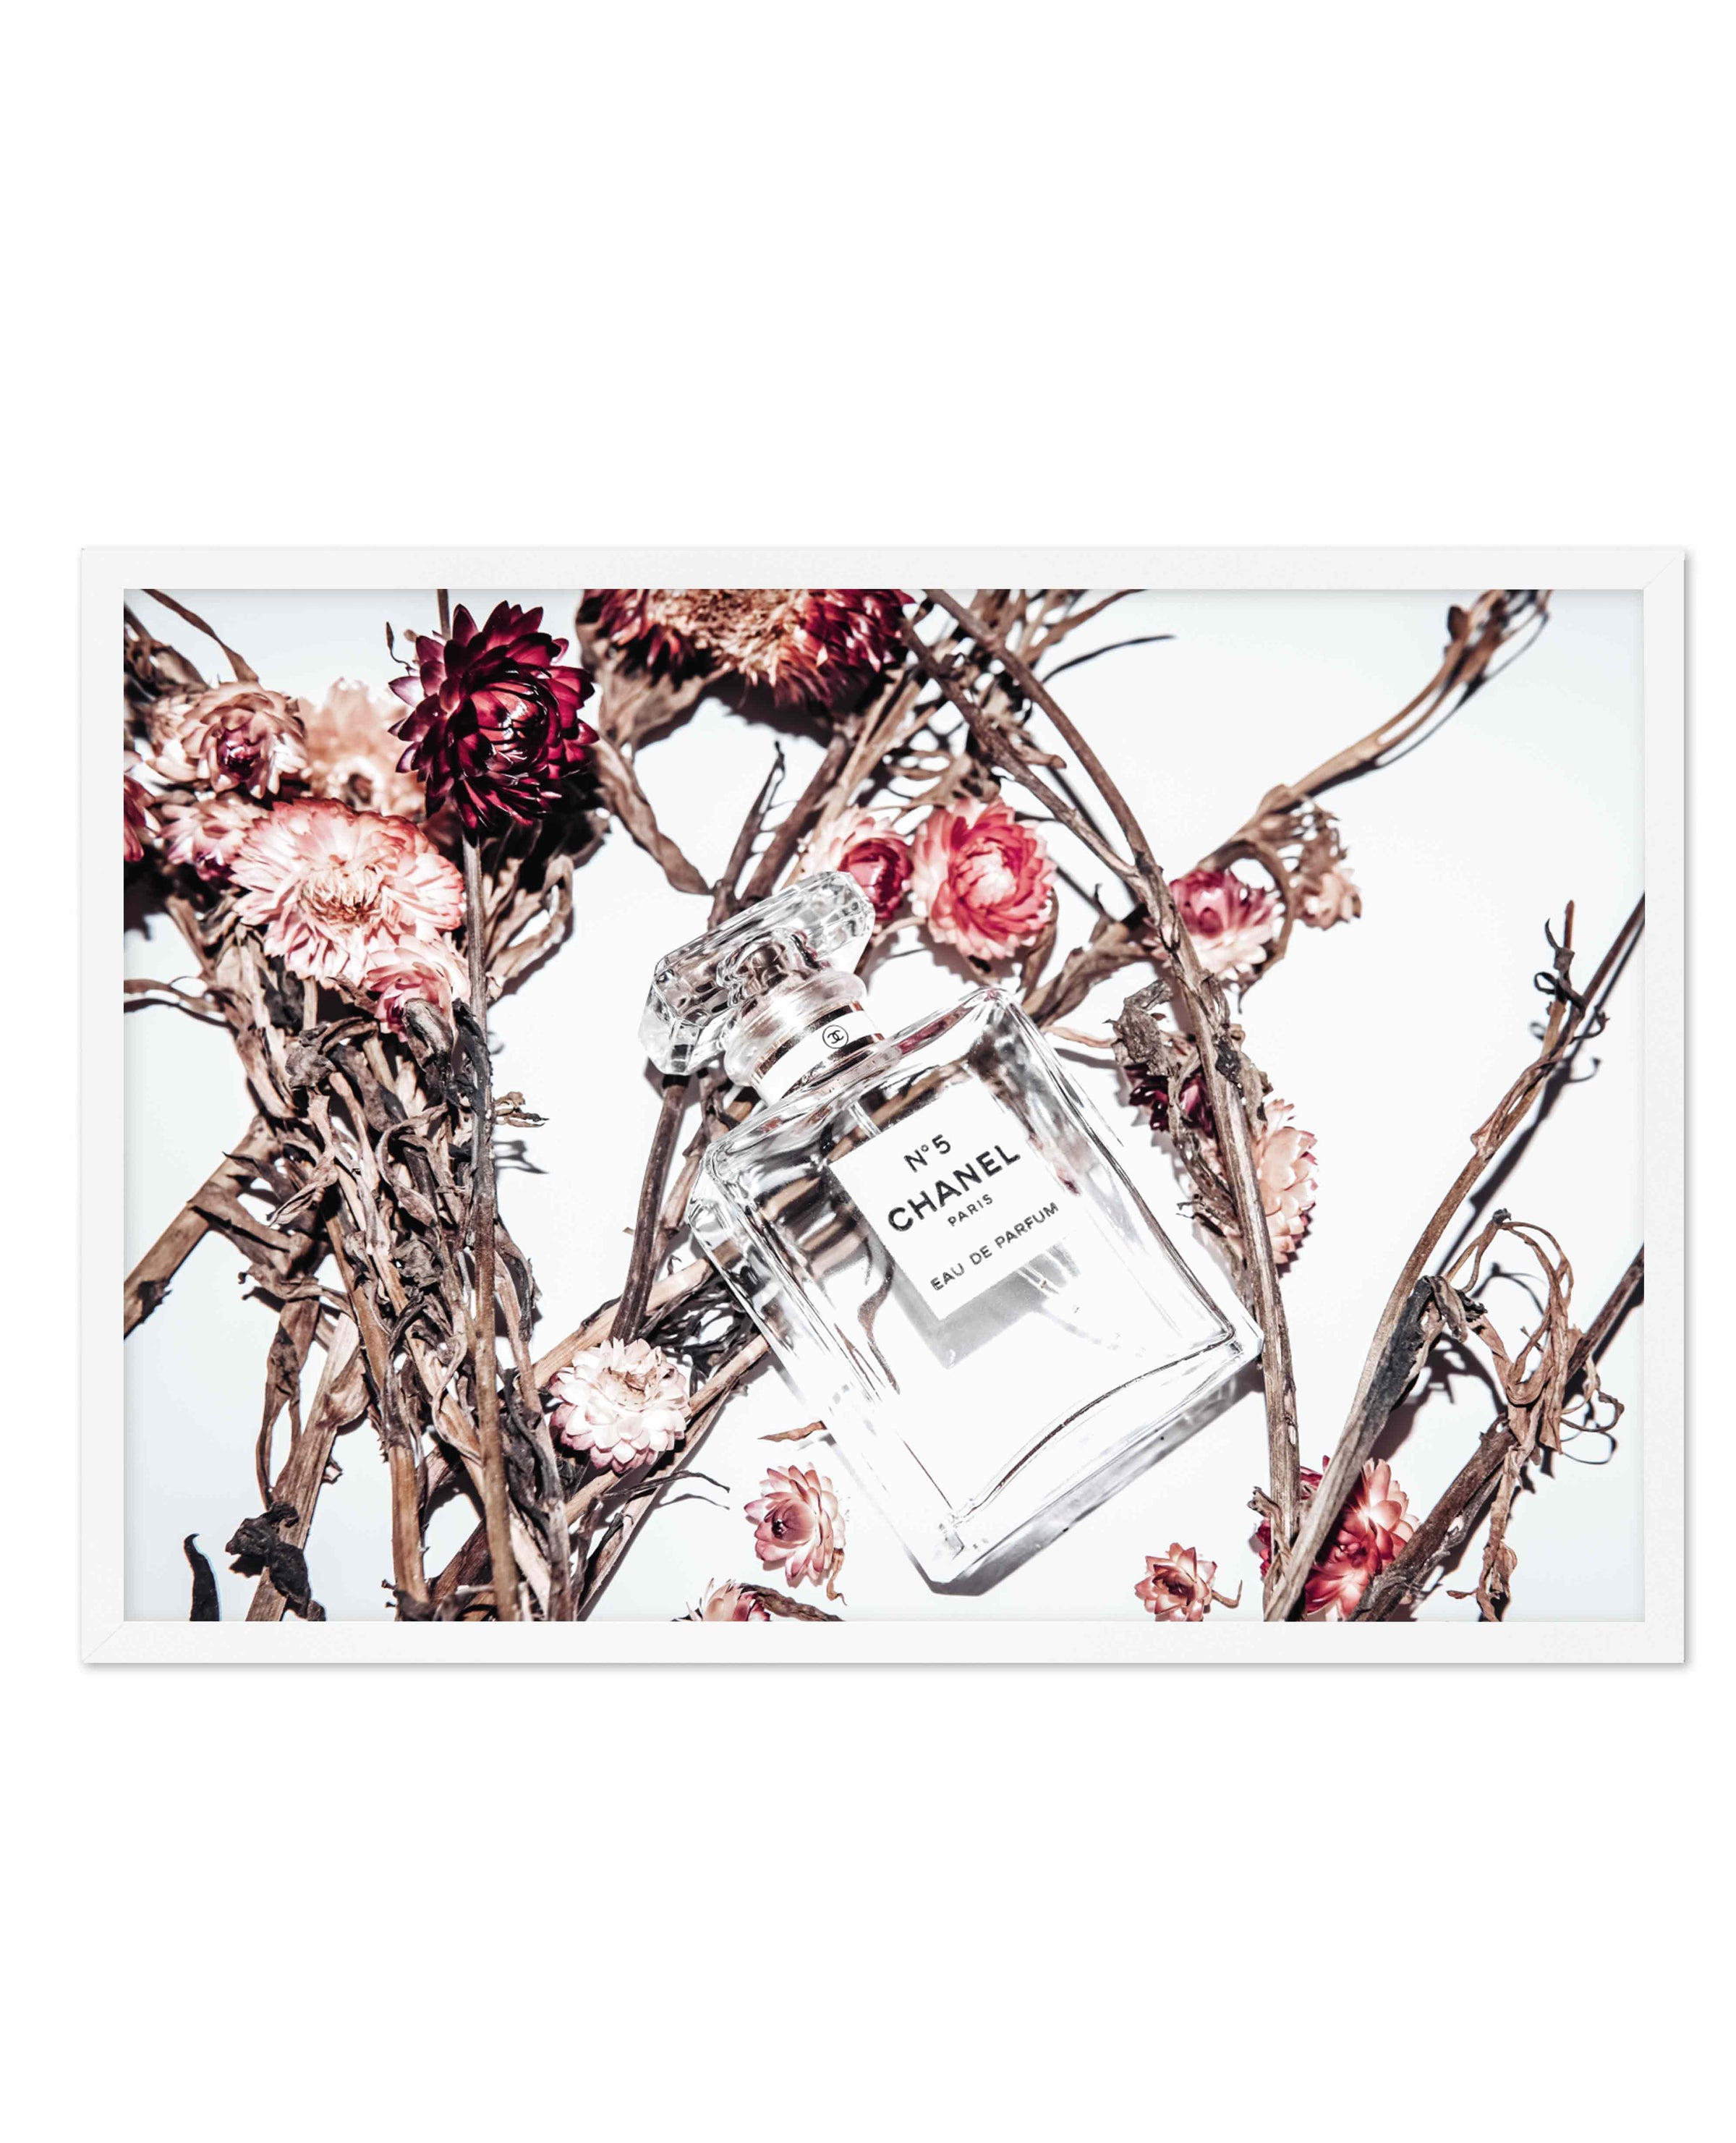 SHOP Iconic 'Chanel' perfume bottle fine art photographic print or poster –  Olive et Oriel